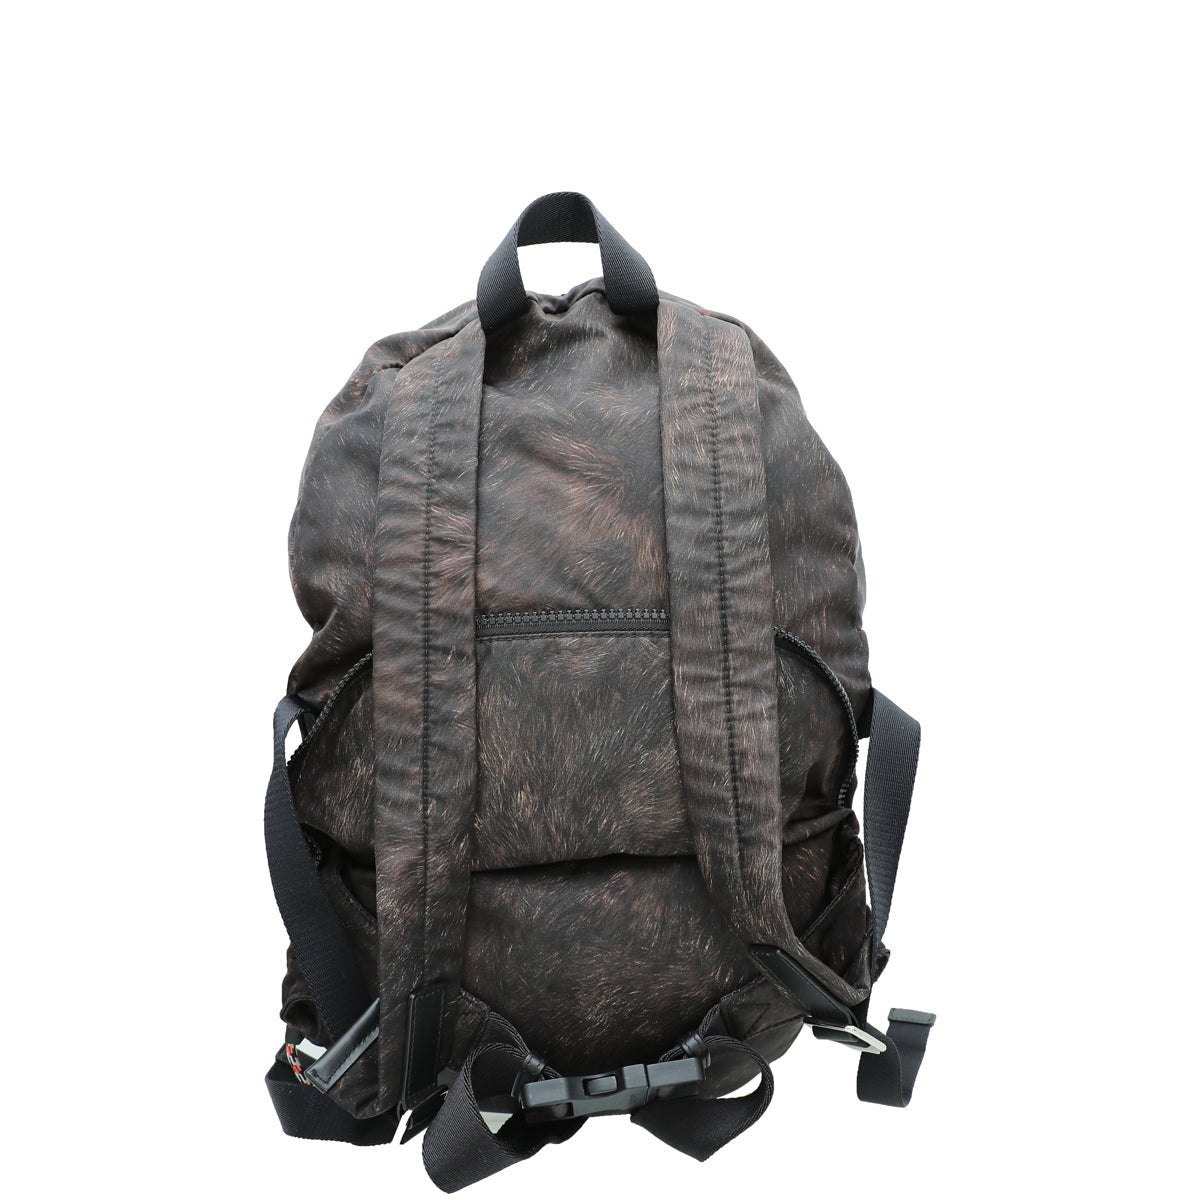 Burberry - Burberry Bicolor Ape Convertible Bum bag/Backpack | The Closet